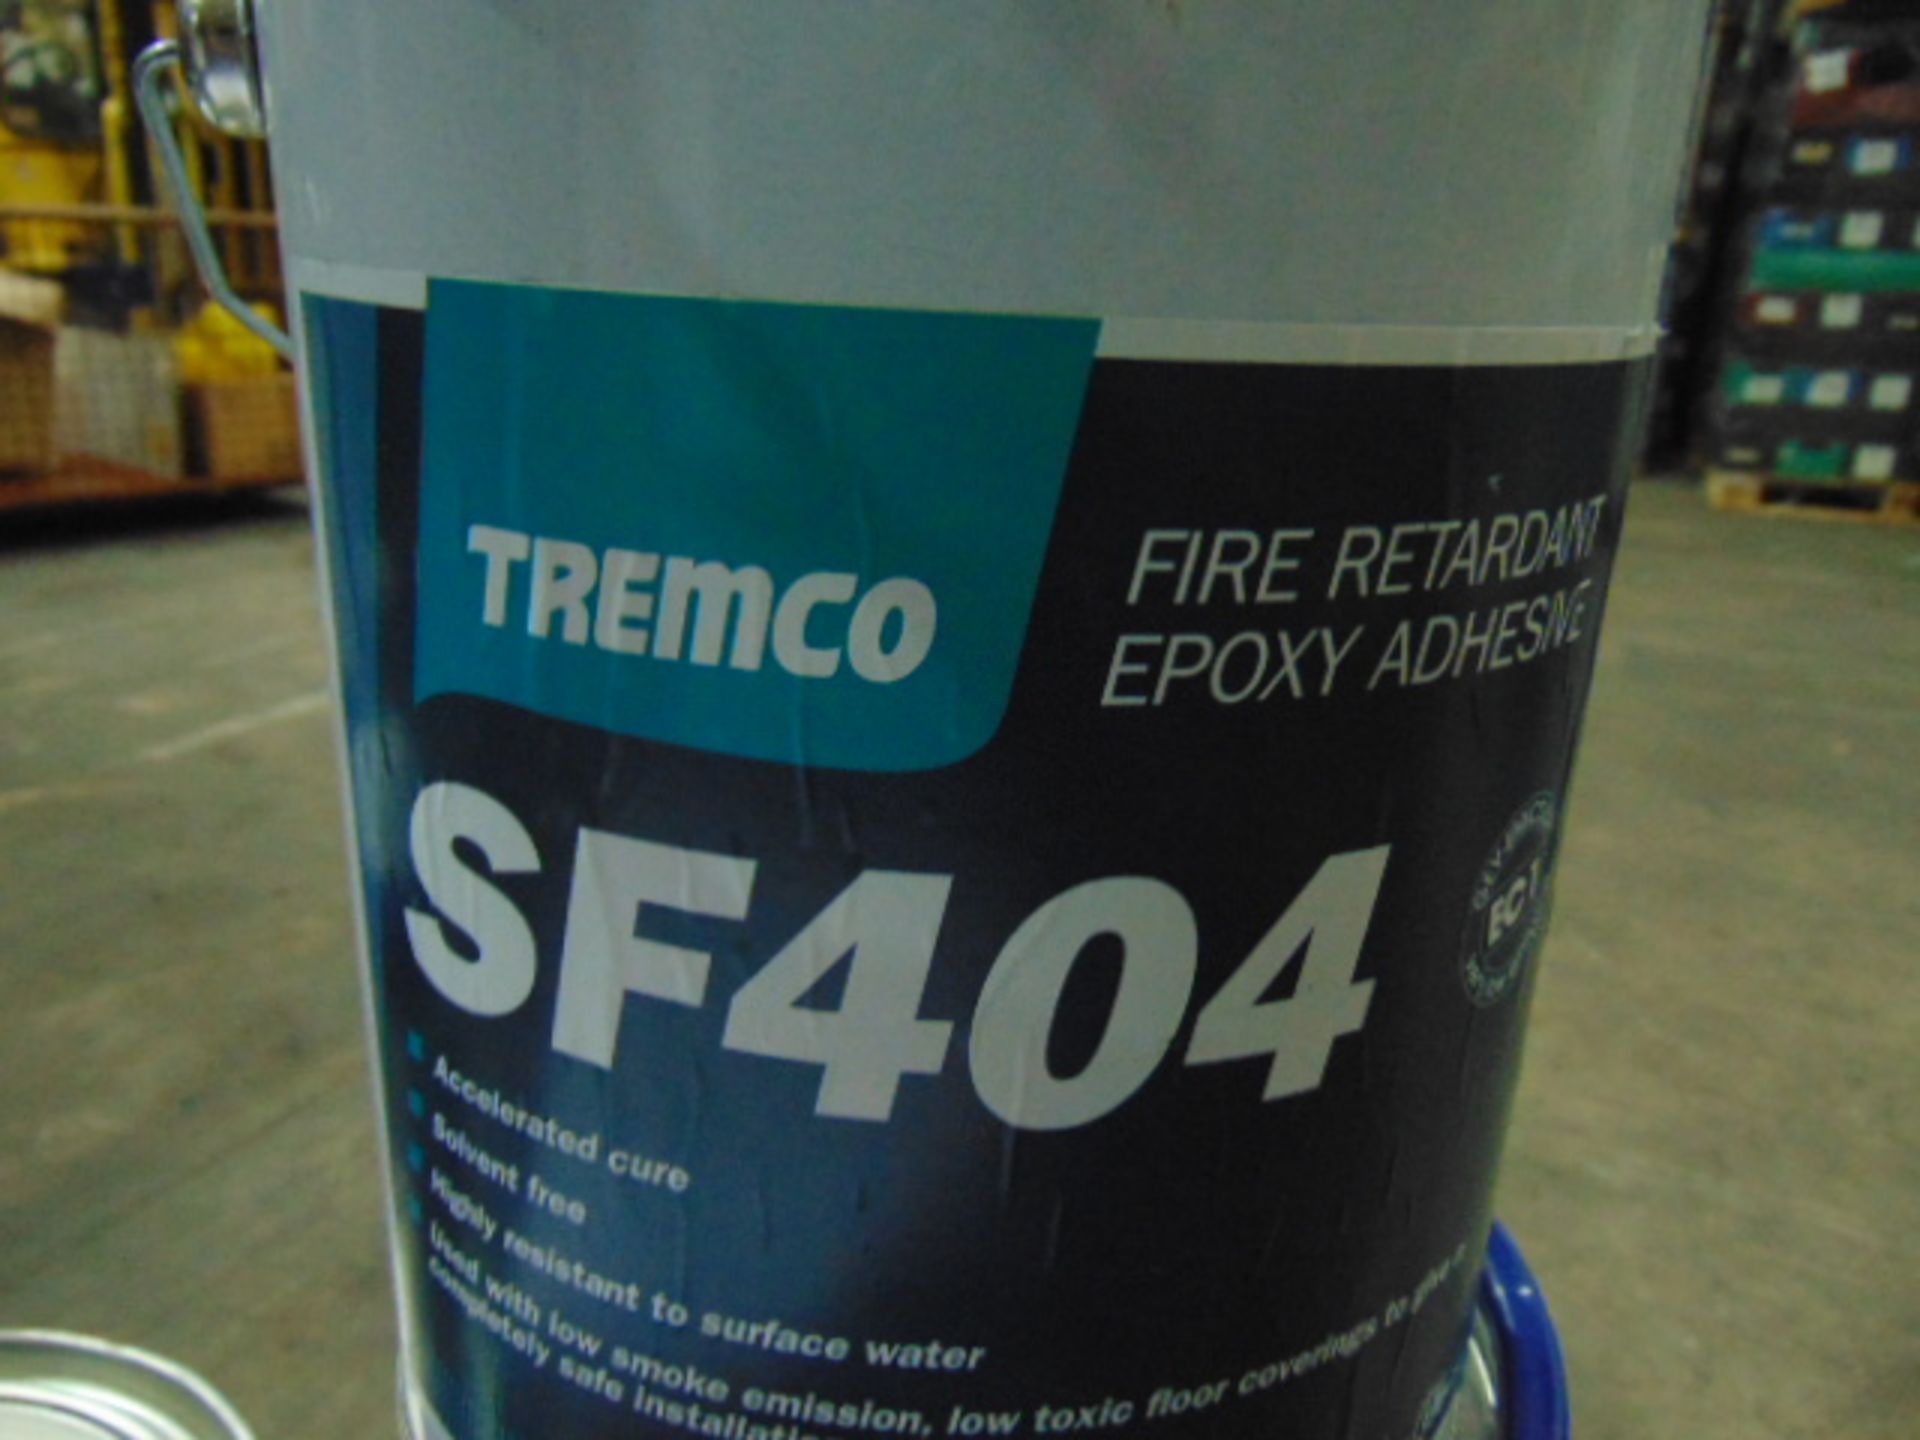 29 x Boxes of Tremco SF404 Fire Retardant Epoxy - Image 4 of 5